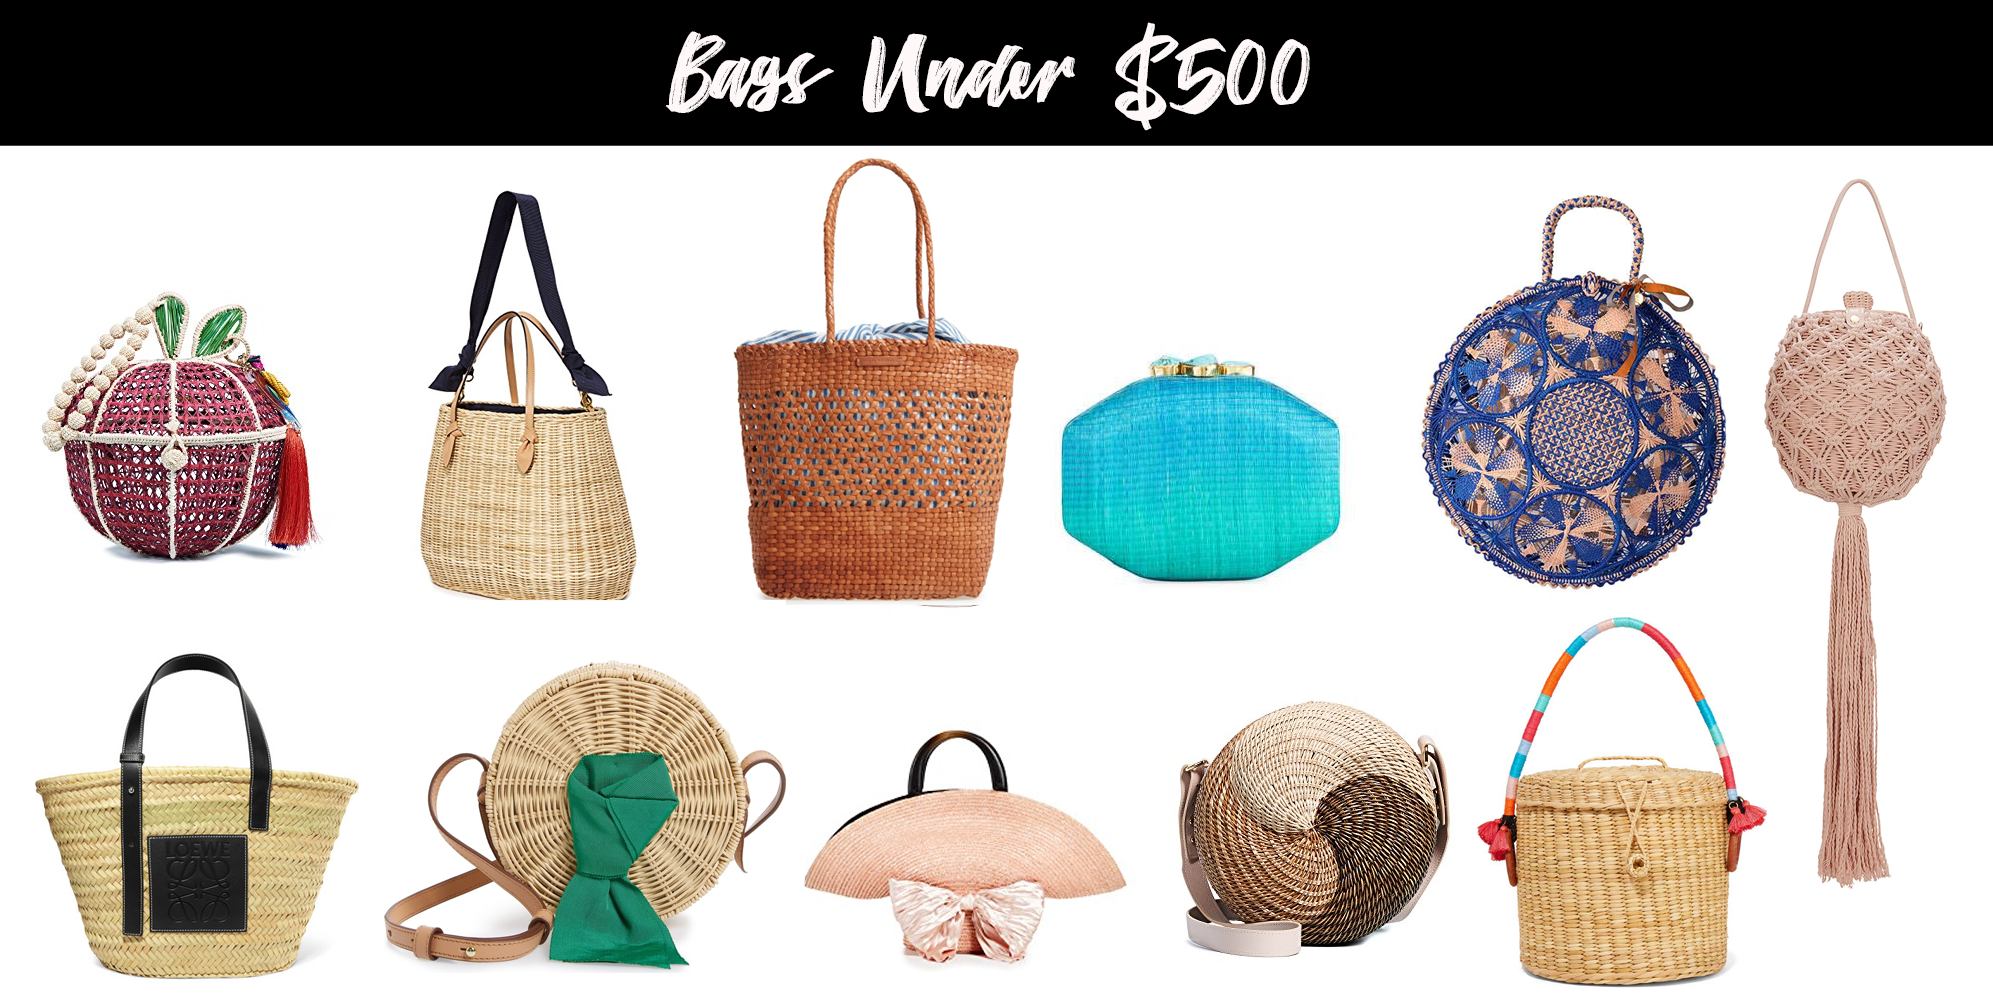 Summer Straw Bags Under $500 / Eugenia Kim Hat Bag